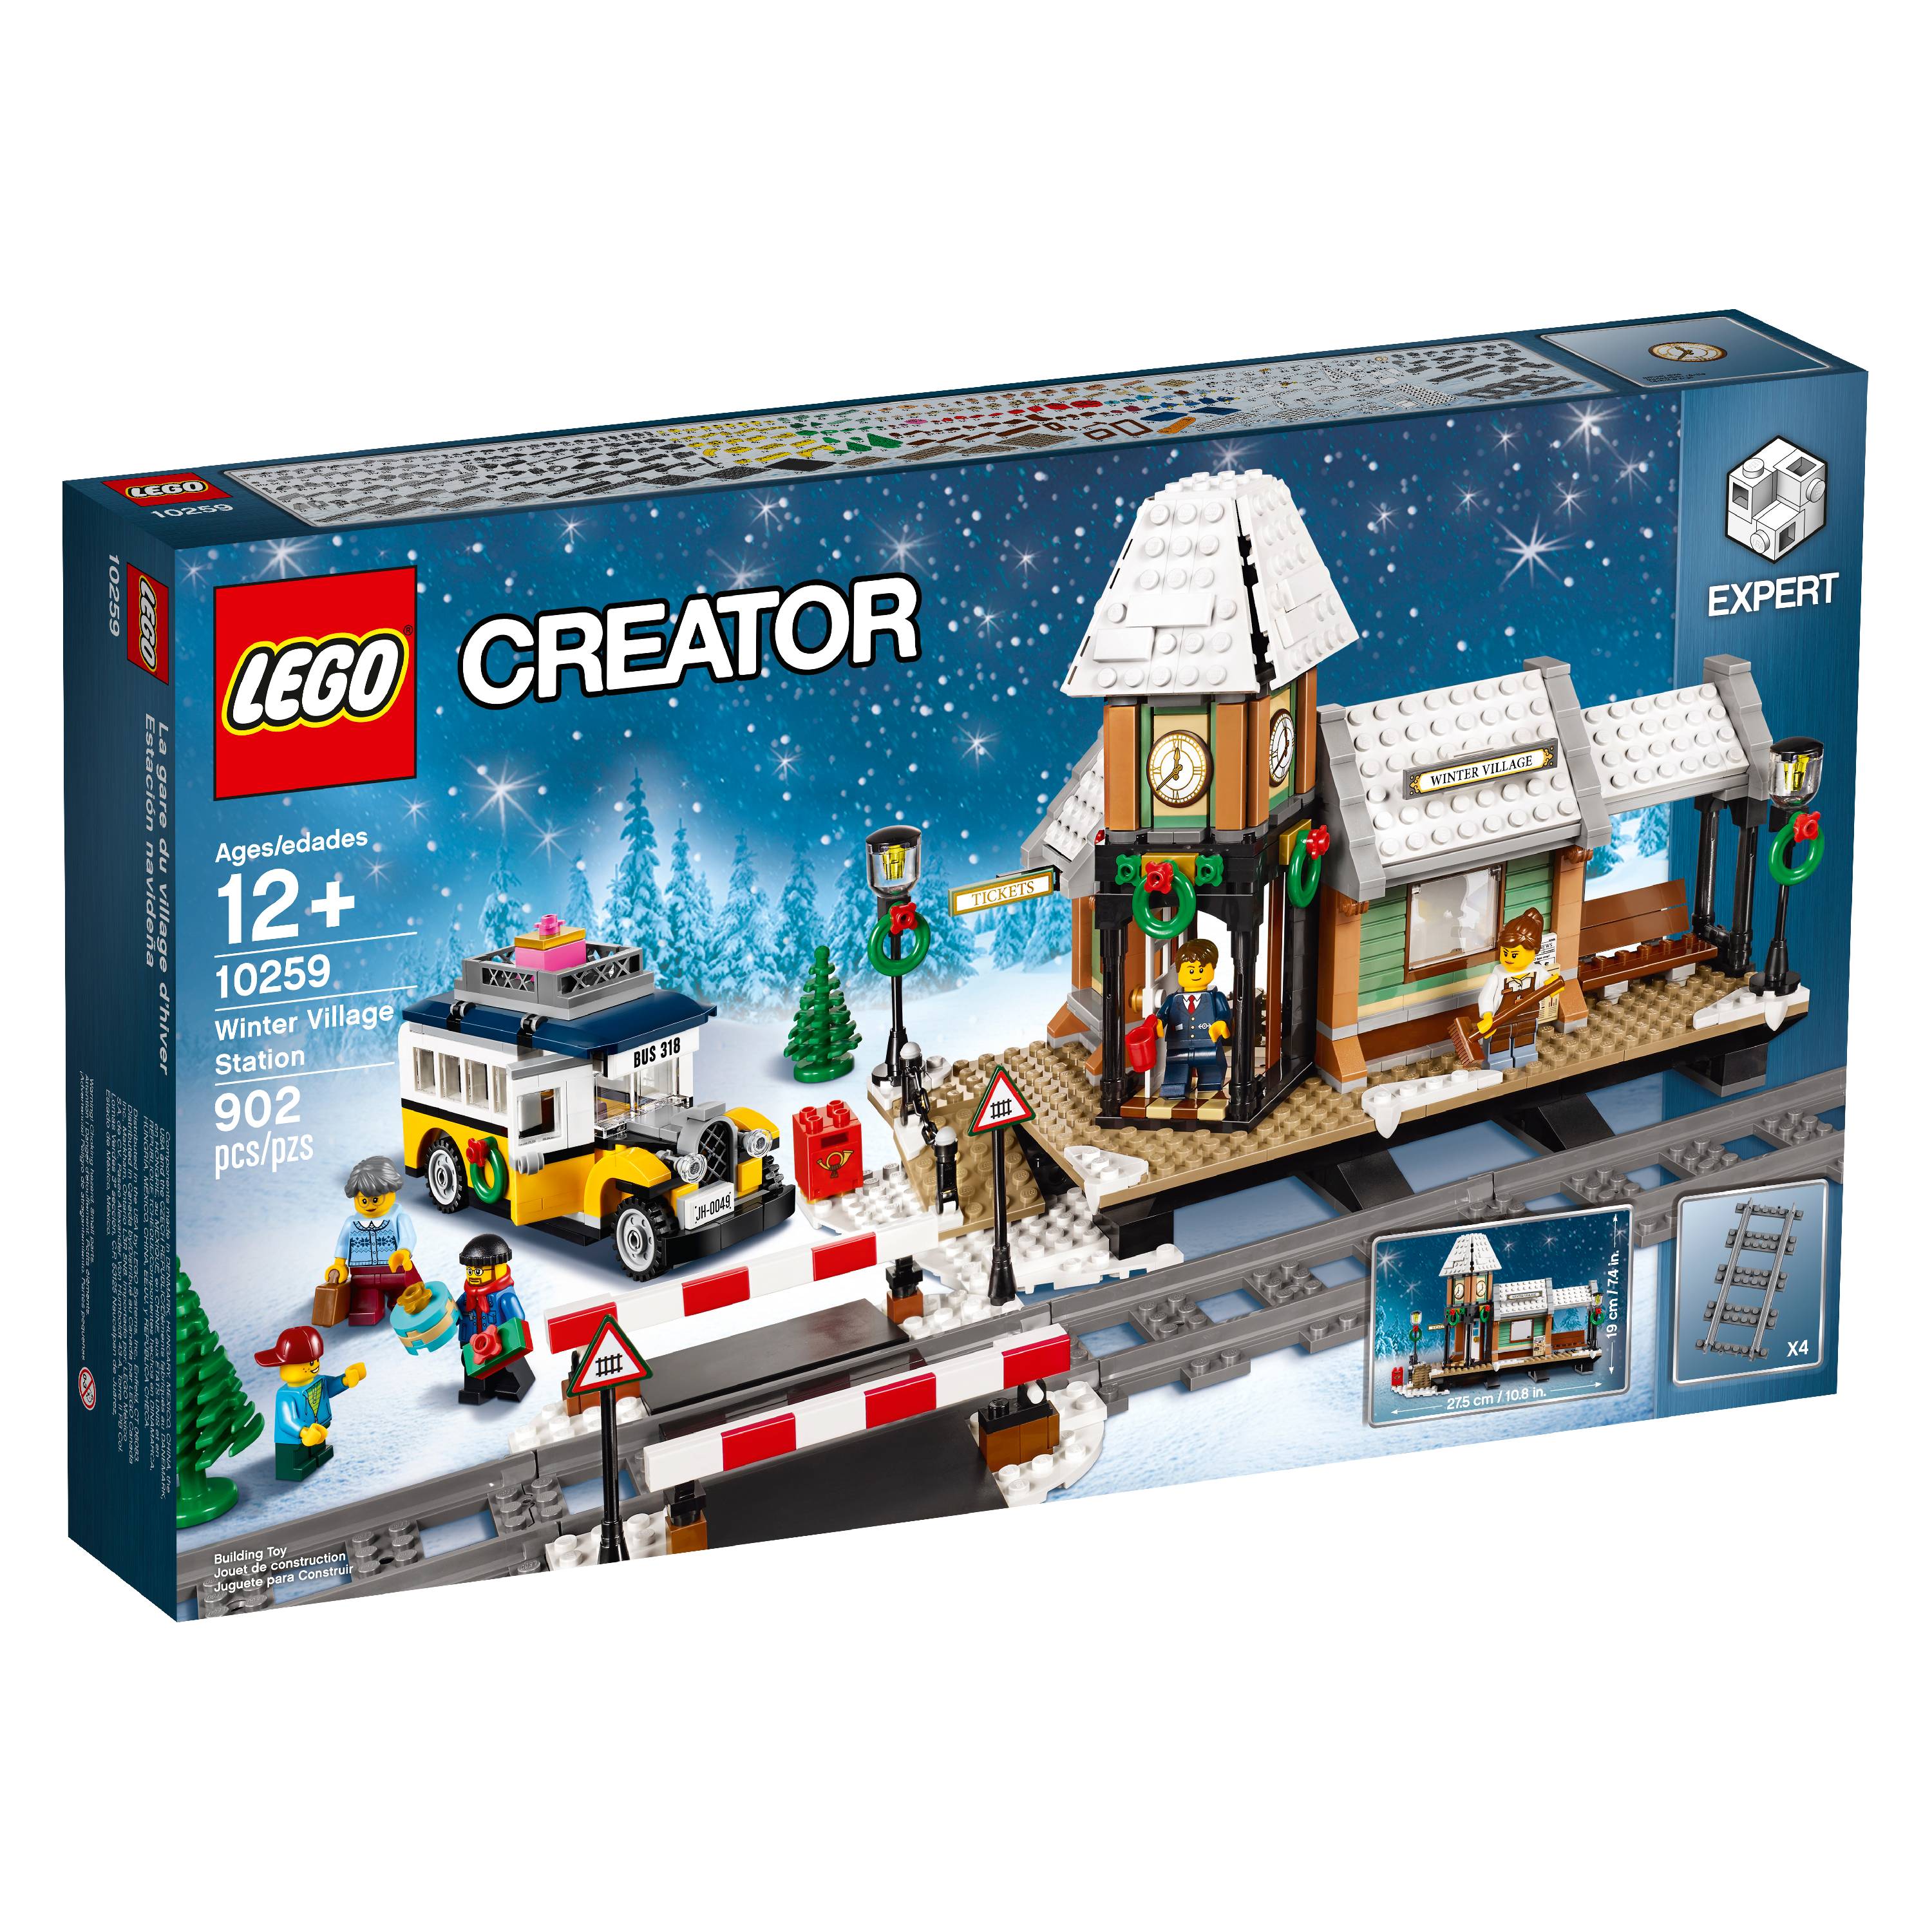 LEGO Creator Expert Winter Village Station 10259 - image 4 of 7